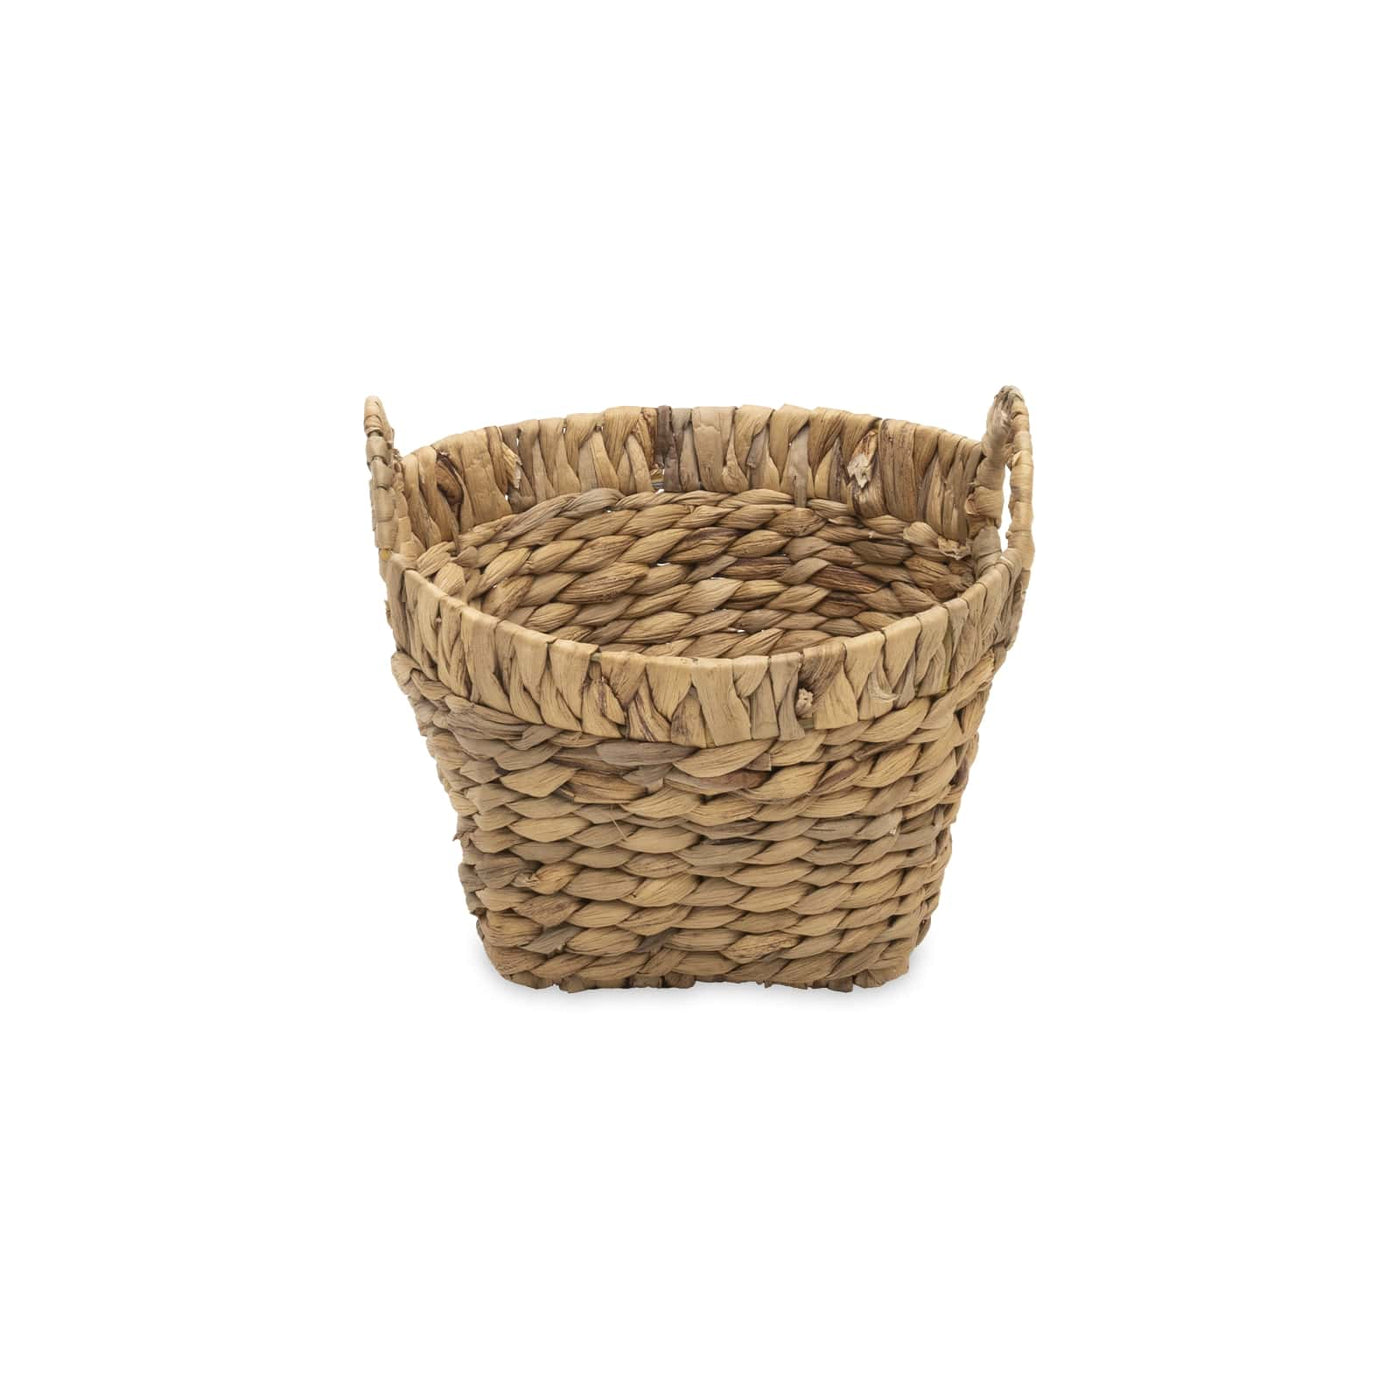 Victoria Water Hyacinth Basket, Natural, S - 1